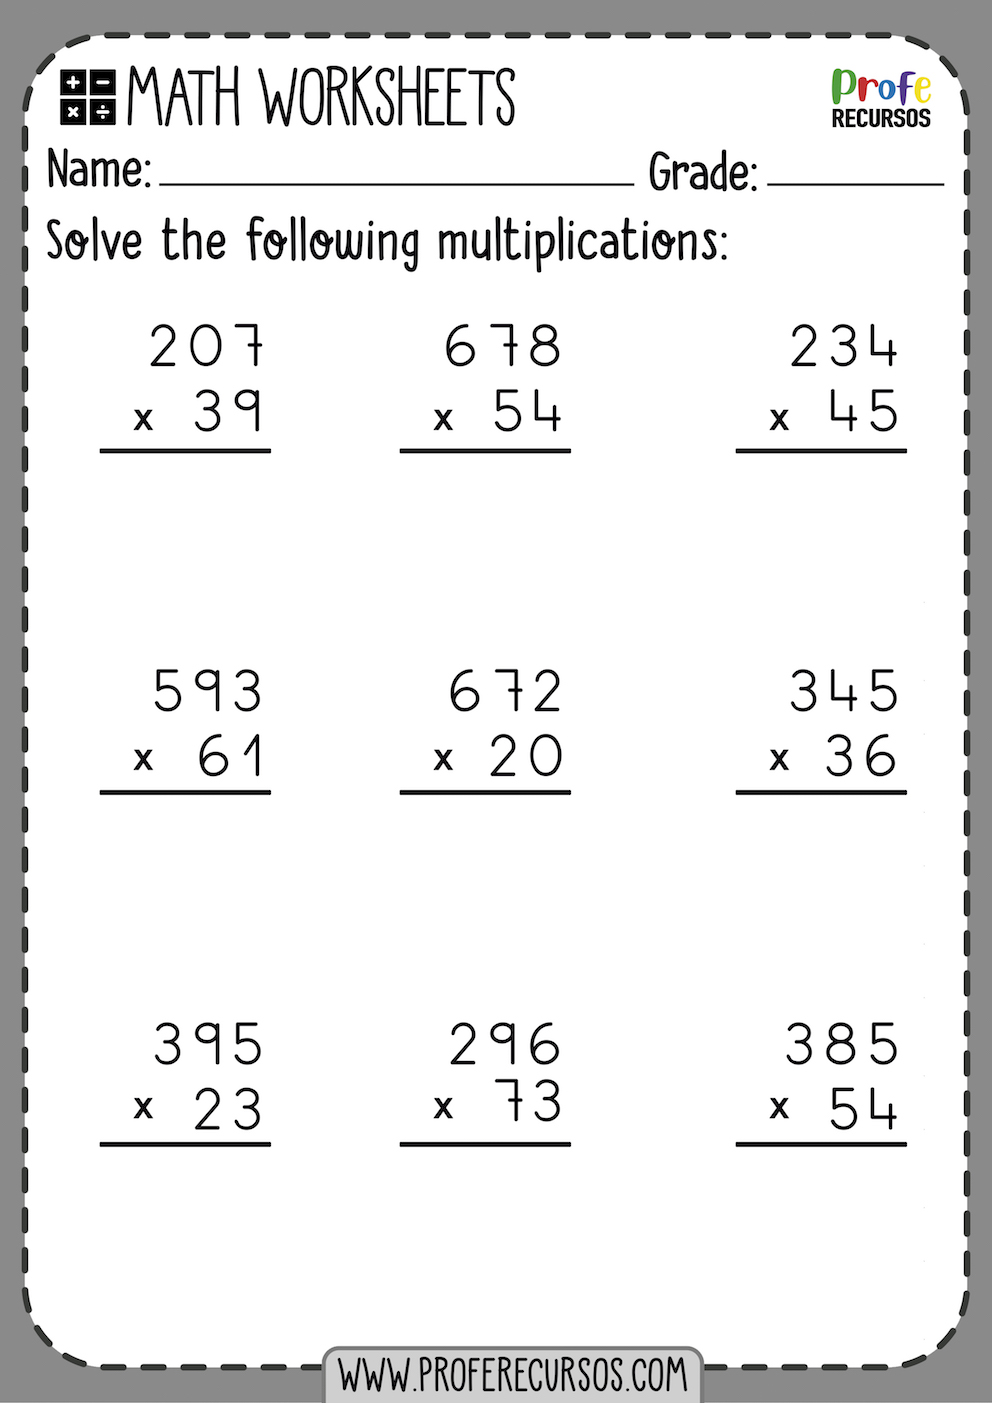 math-flashcards-multiplication